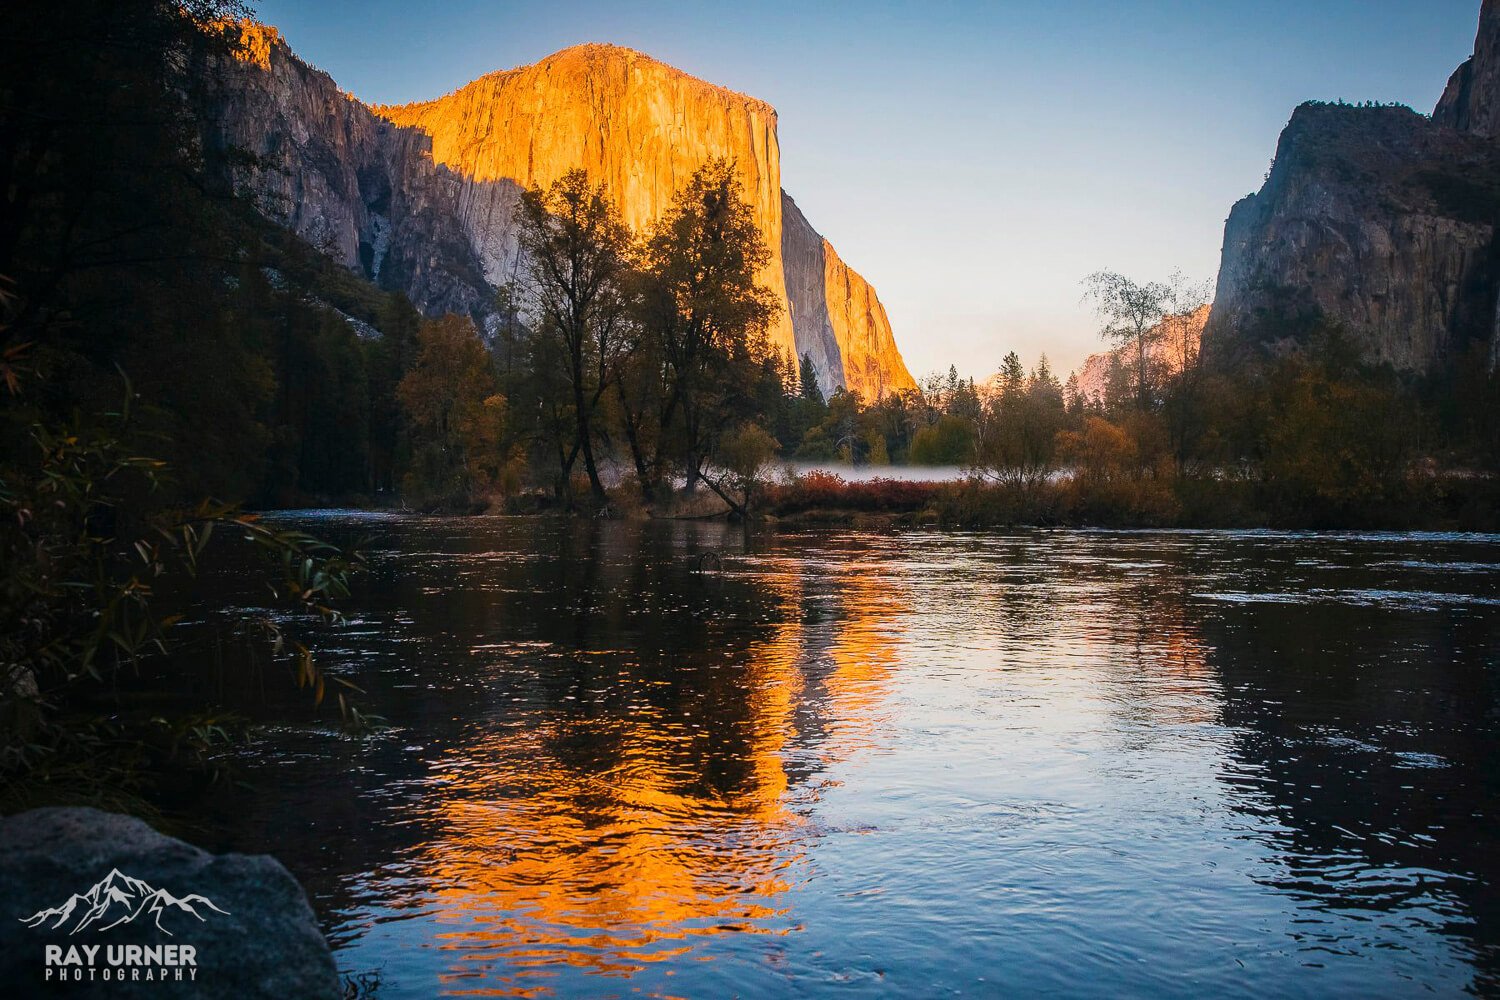 Valley-View-Yosemite-National-Park-002.jpg